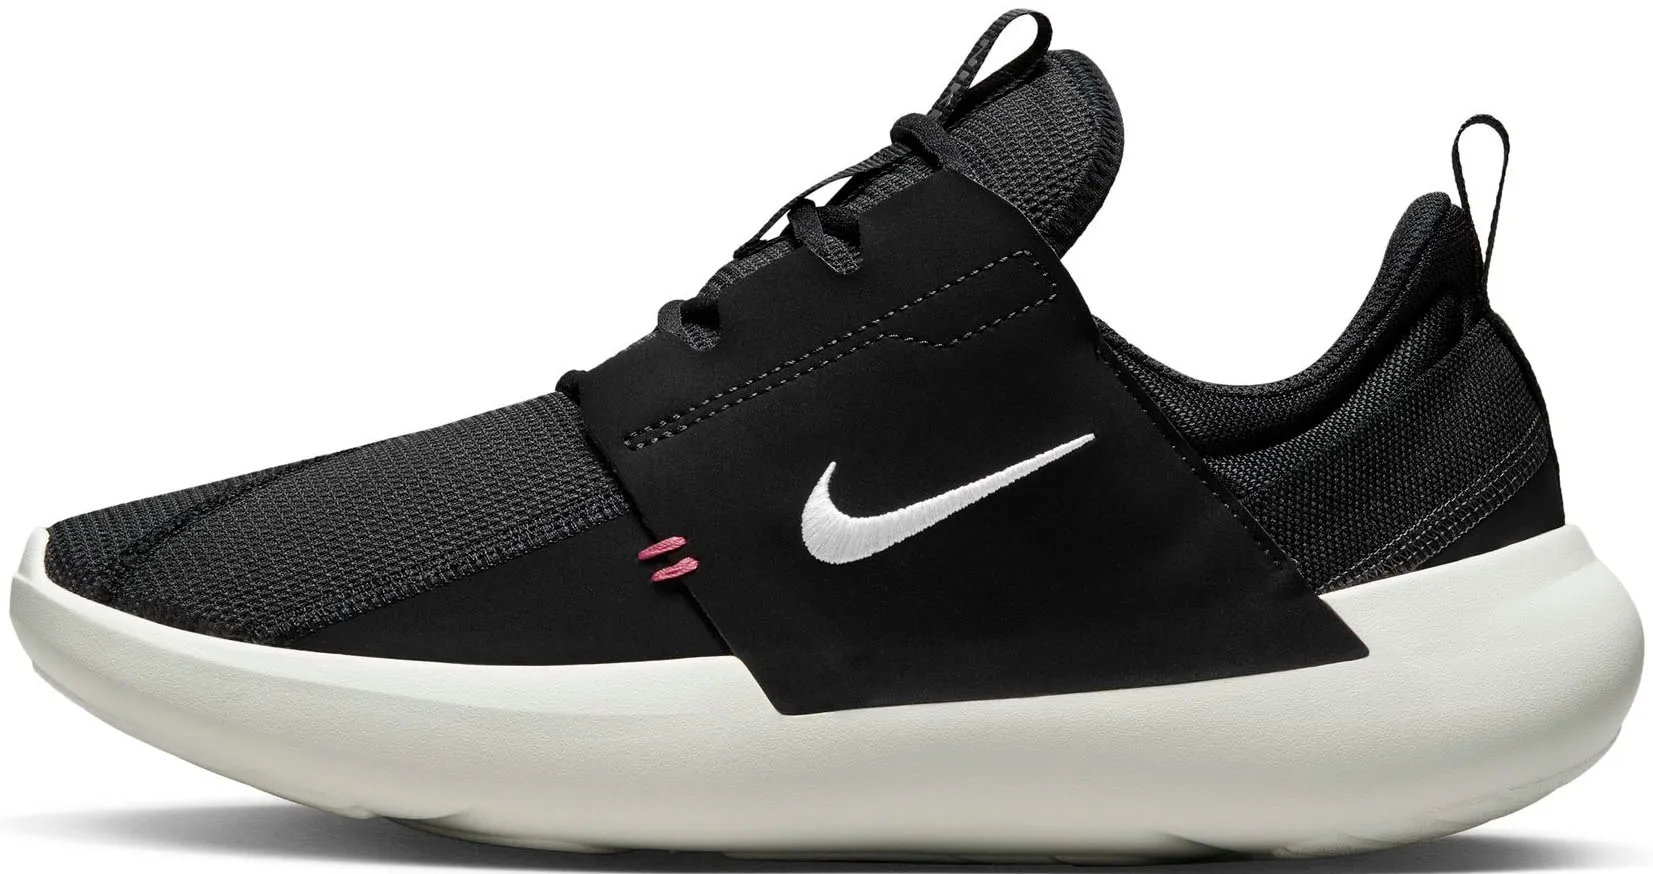 Sneaker NIKE SPORTSWEAR "E-SERIES AD" Gr. 40, schwarz-weiß (dunkelgrau) Schuhe Modernsneaker Stoffschuhe